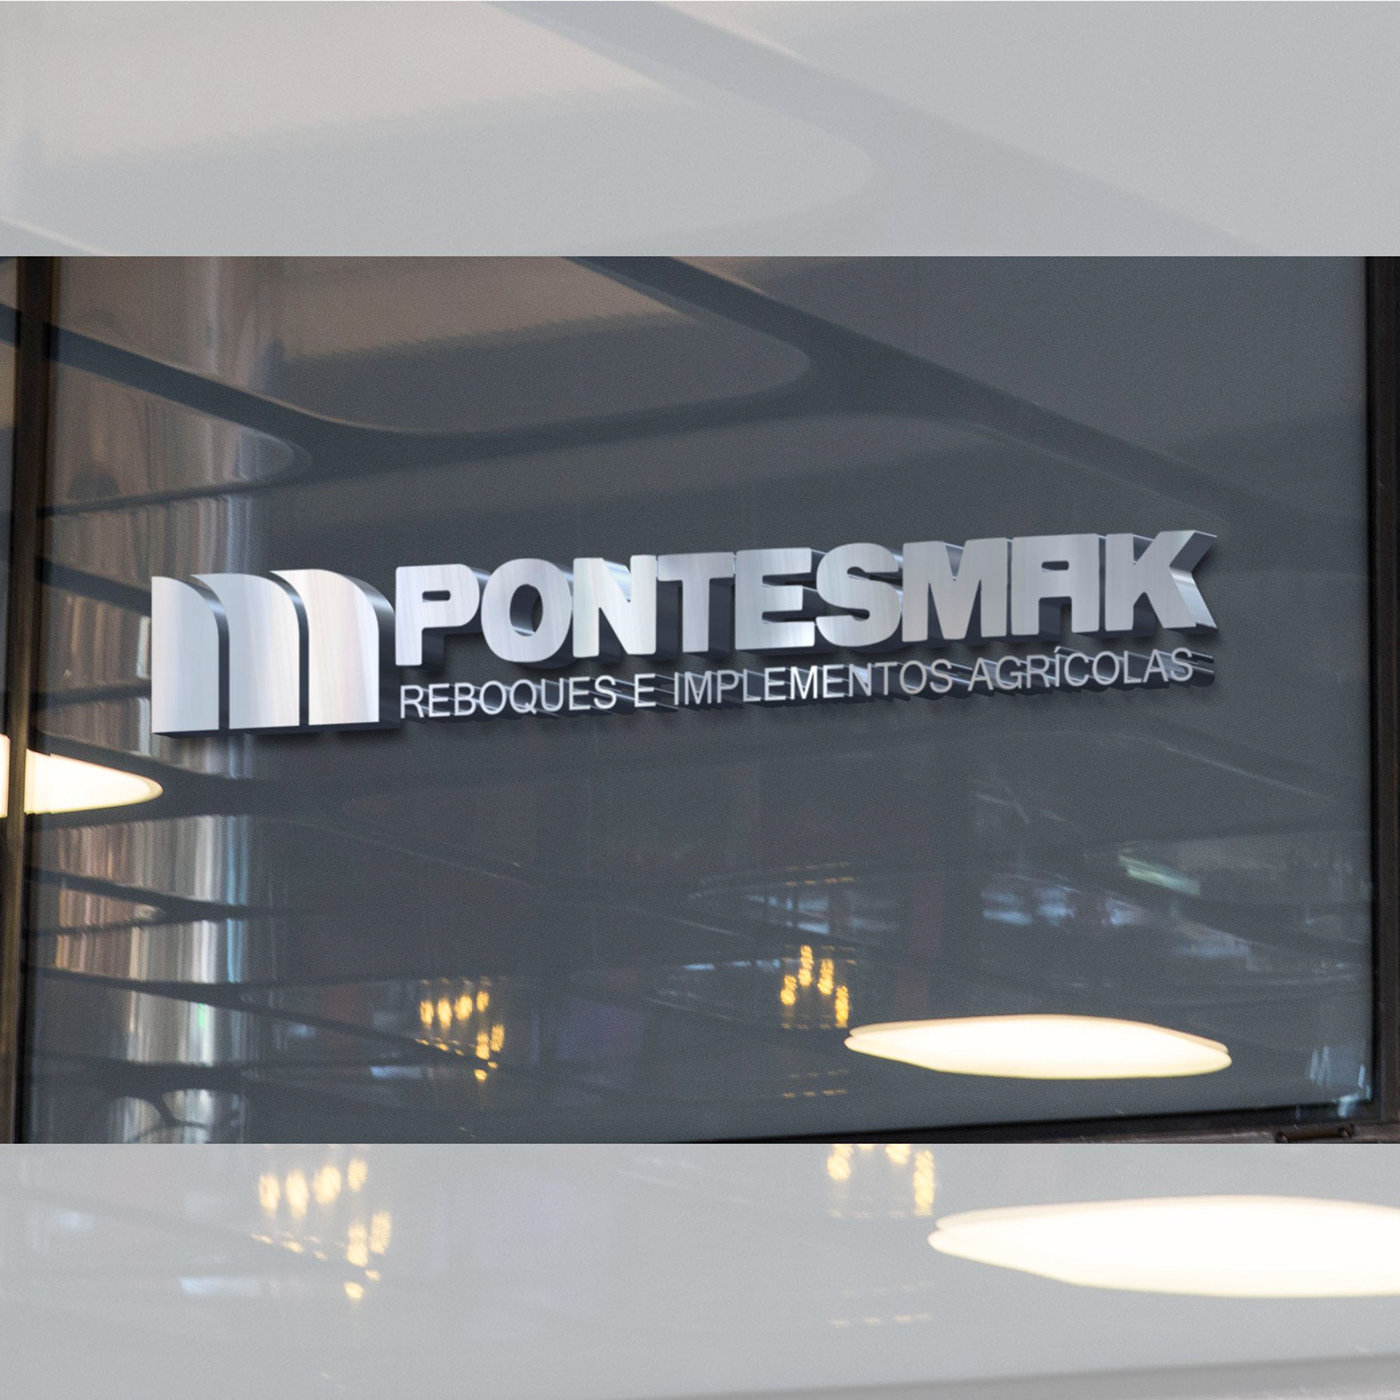 Logomarca para oficina - Logomarca para indústria - PontesMak
